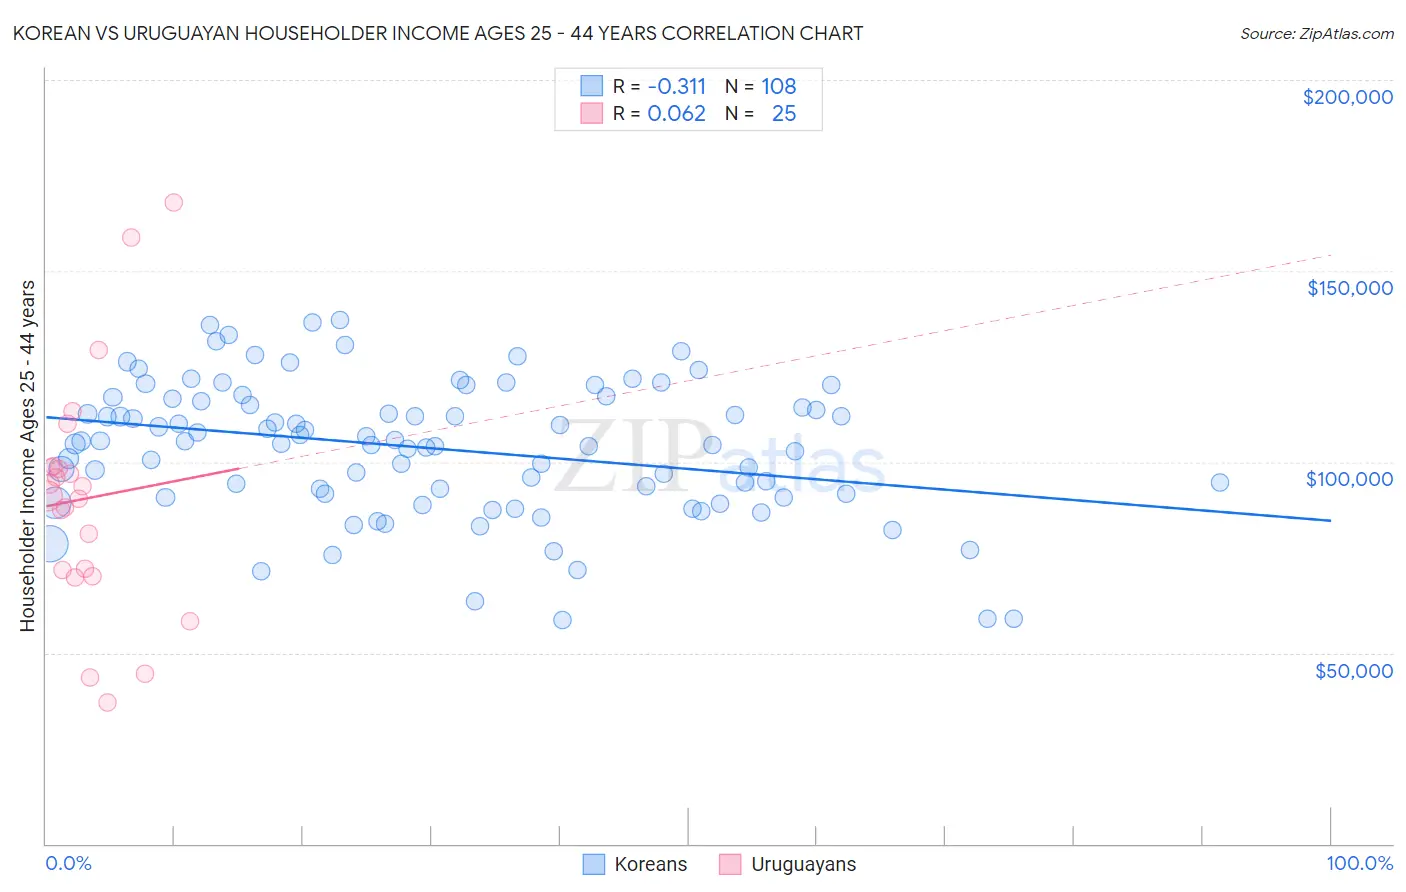 Korean vs Uruguayan Householder Income Ages 25 - 44 years